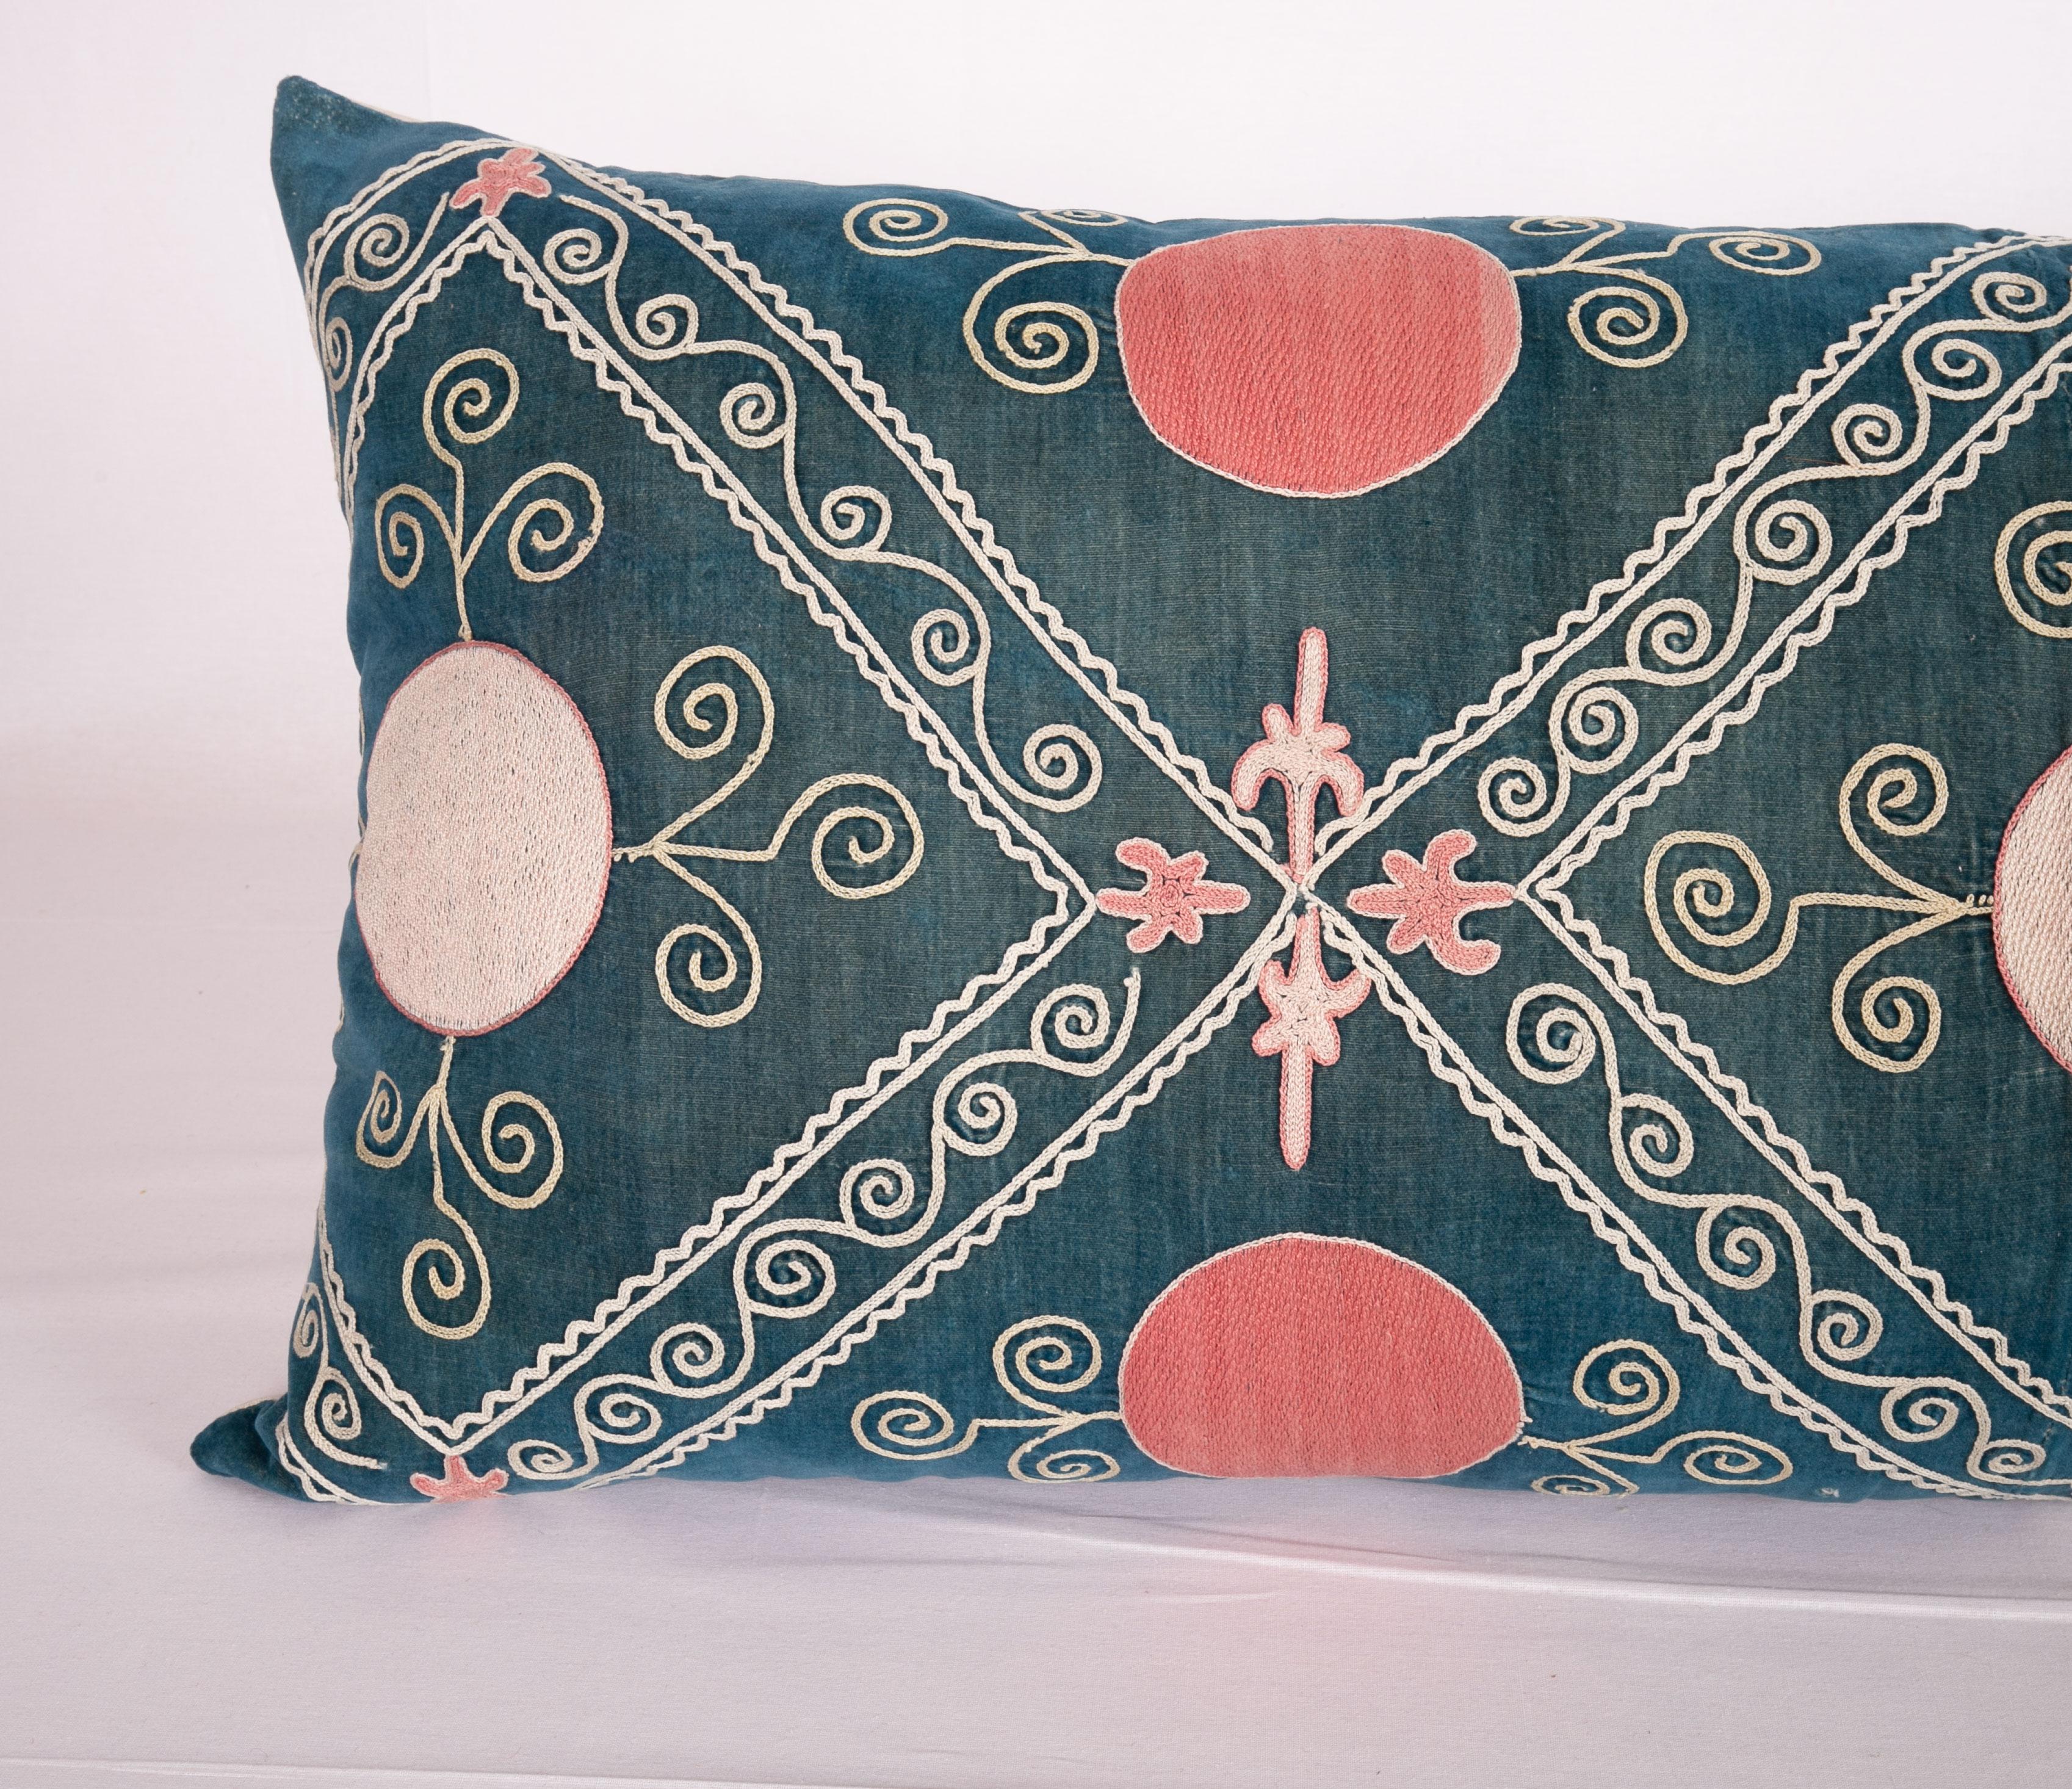 Uzbek Antique Suzani Pillow Case Made from an Early 20th Century Velvet Suzani